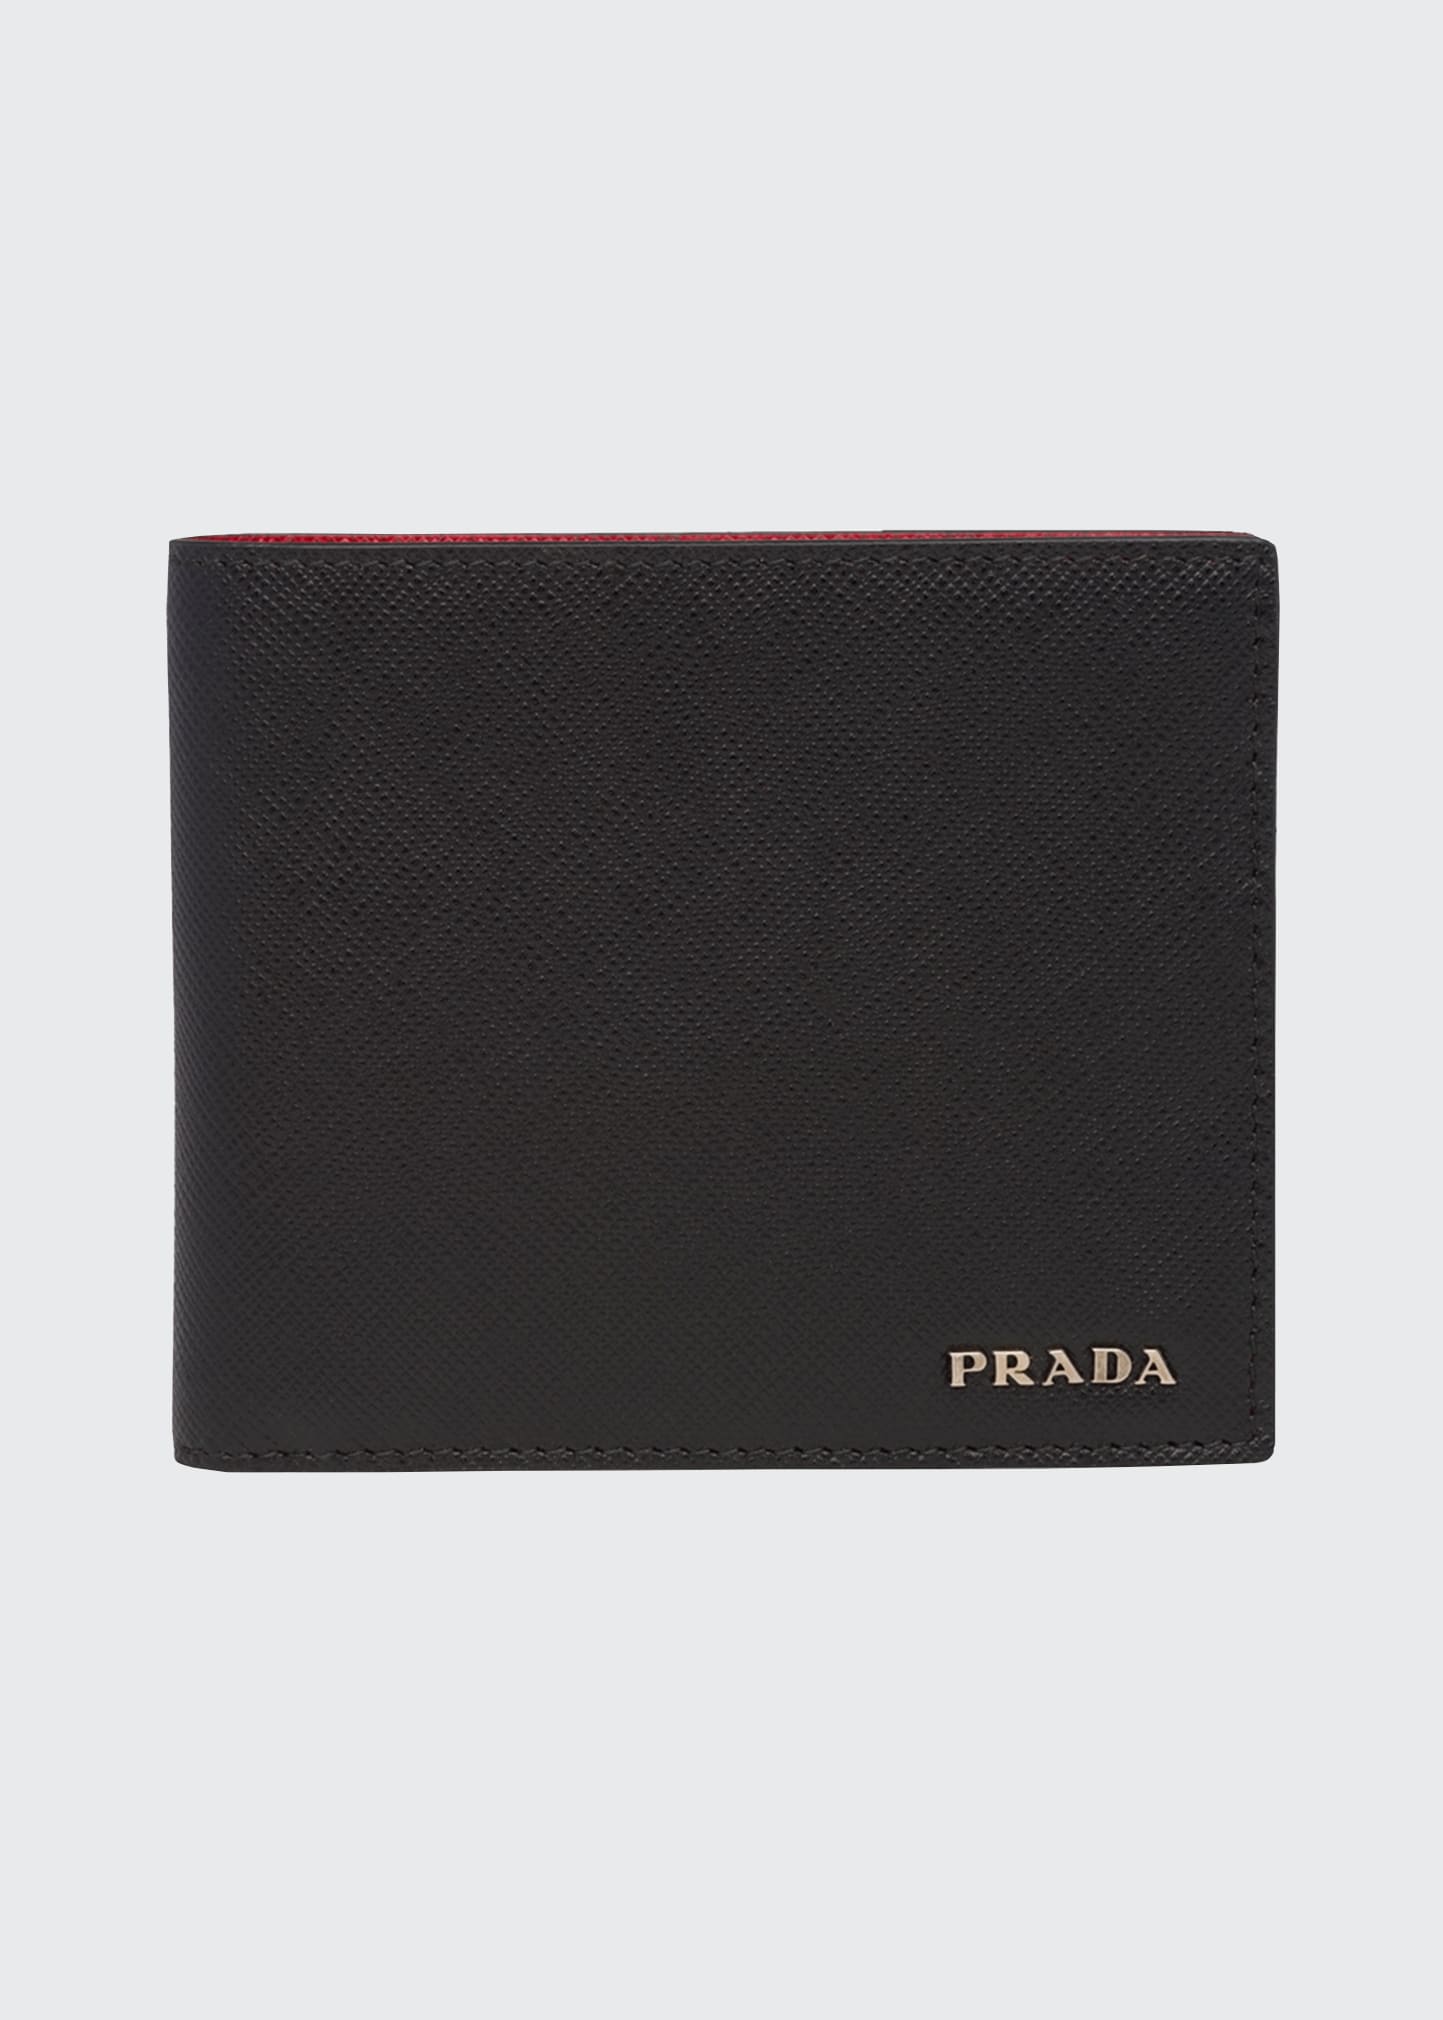 Prada Men's Saffiano Leather Bi-fold Wallet In F0km3 Baltico Mar